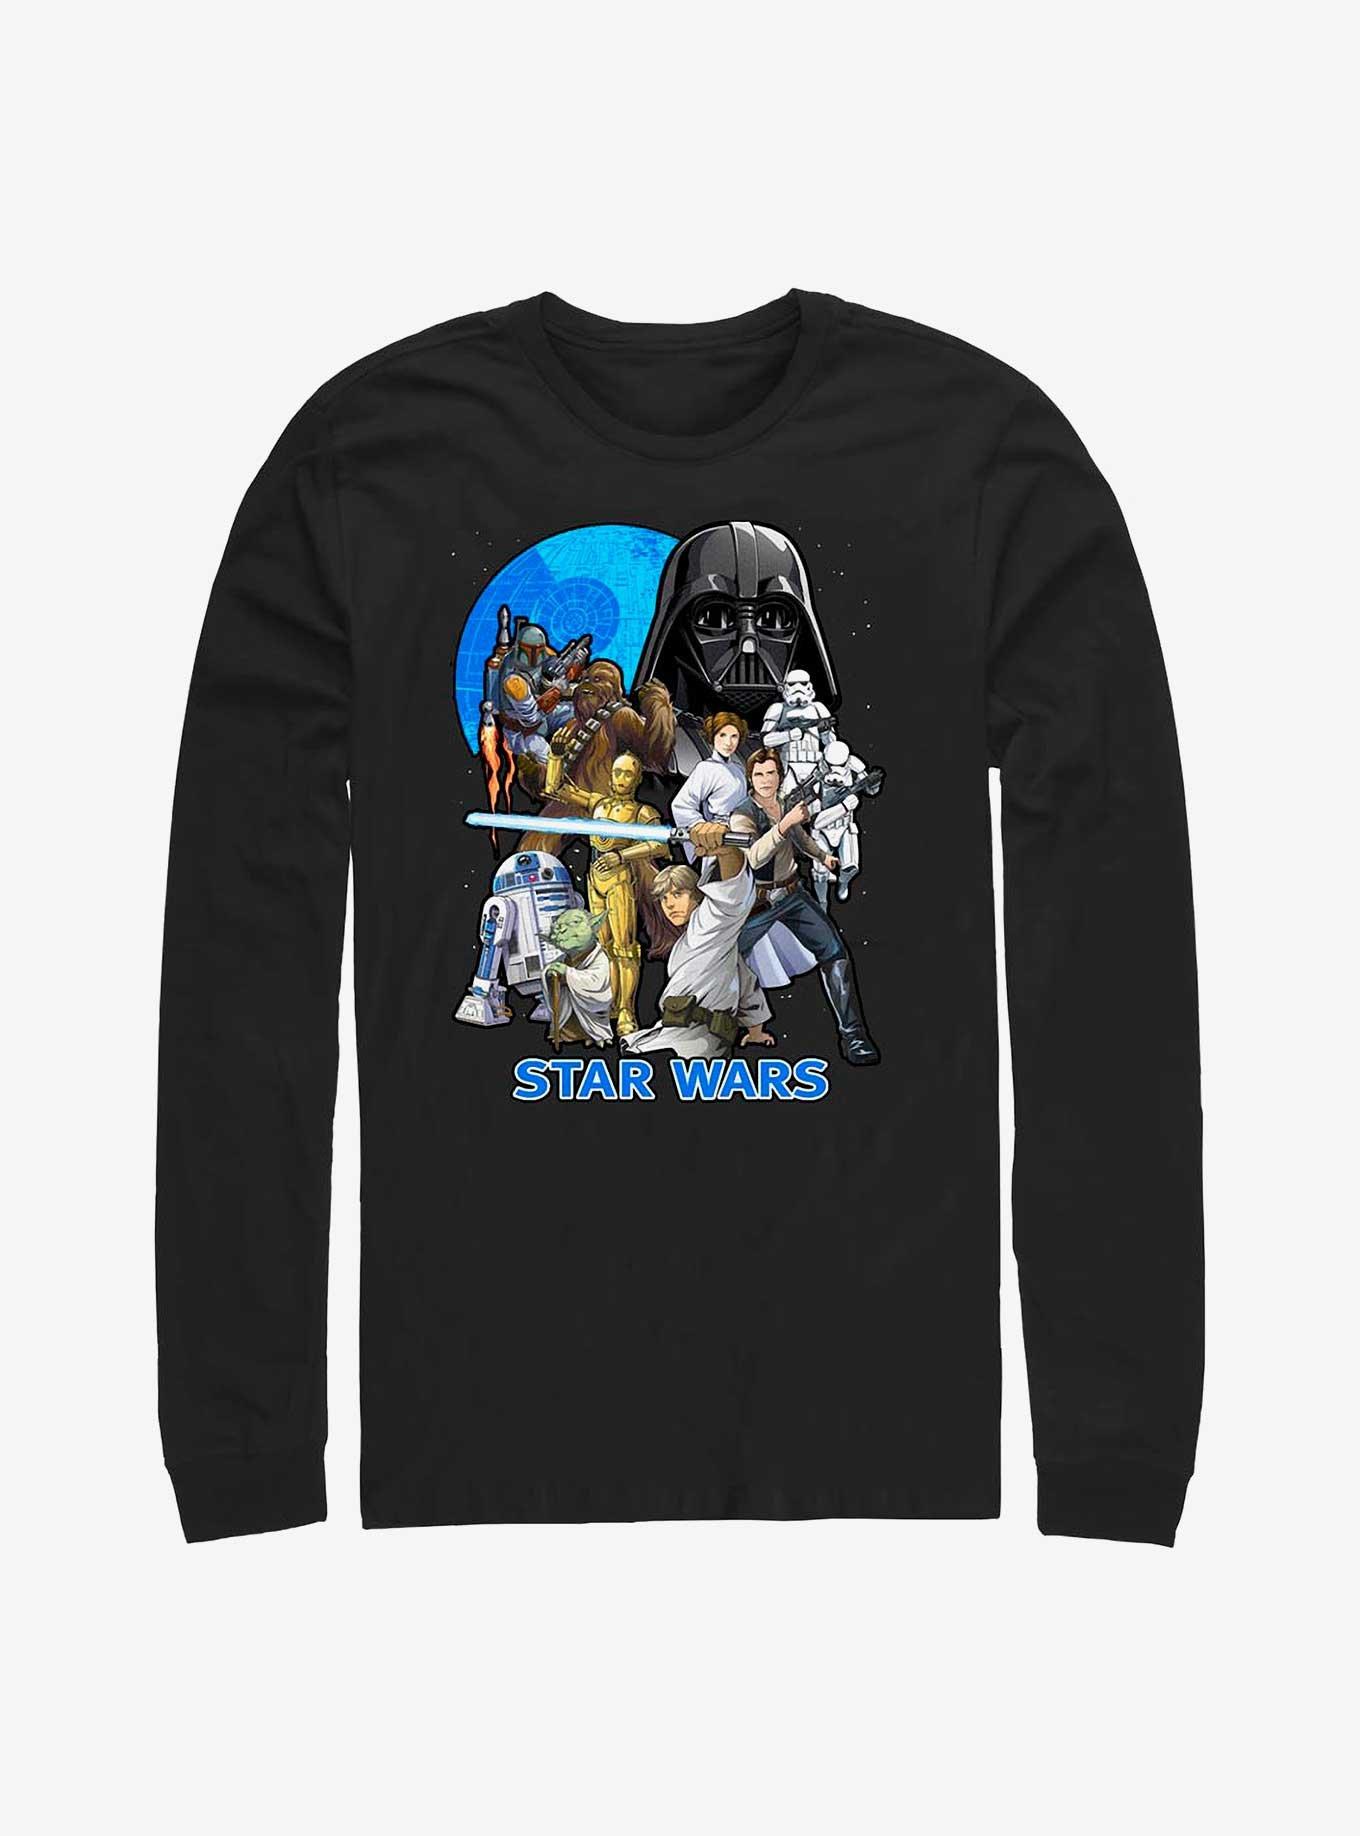 Star Wars Galaxy Fighters Long-Sleeve T-Shirt